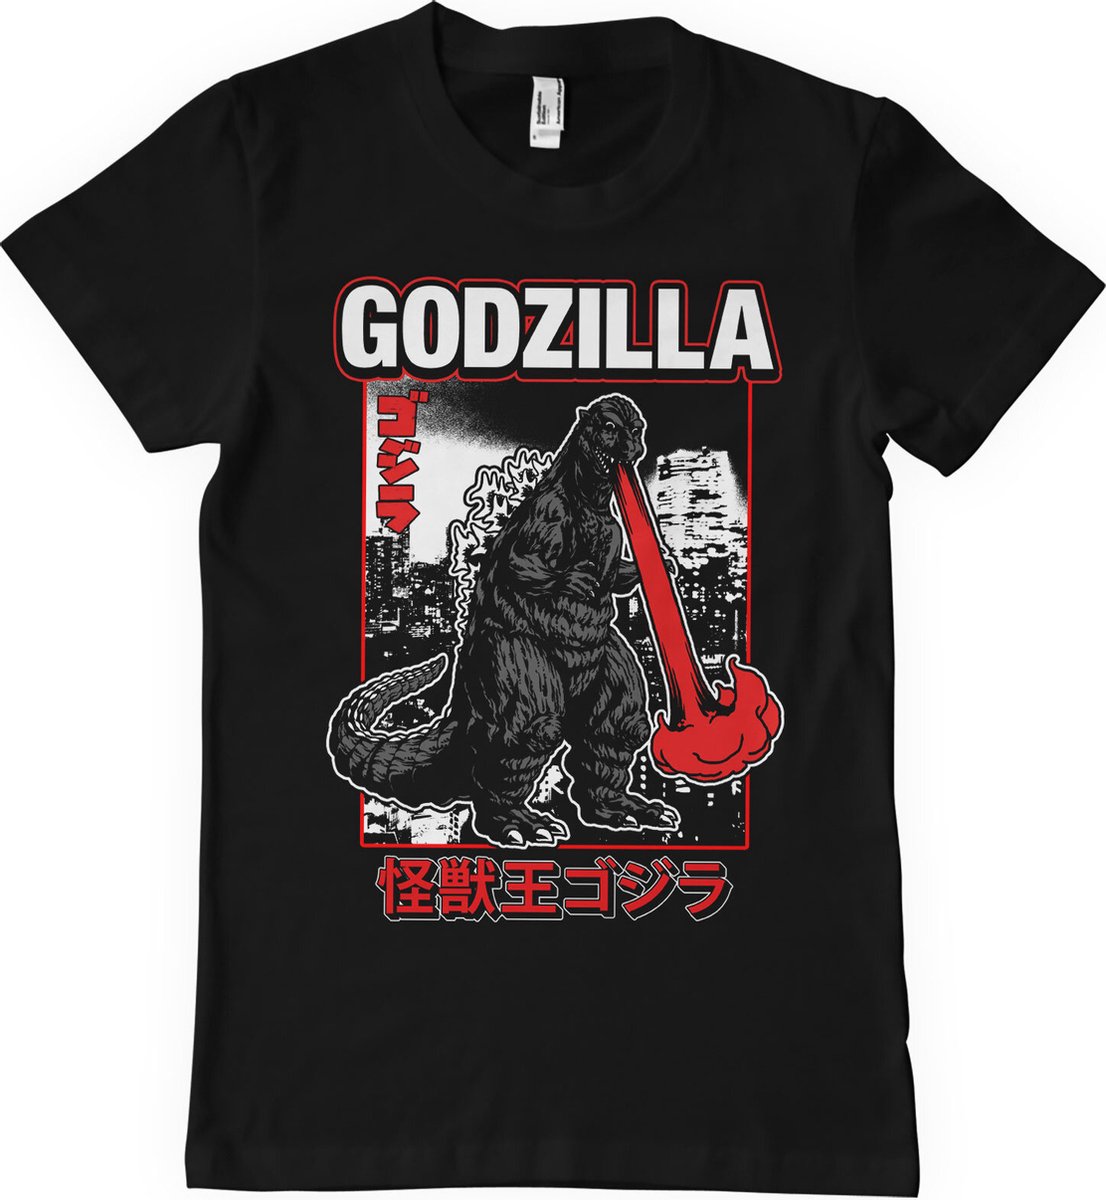 Godzilla Japans Shirt - Atomic Breath maat XL